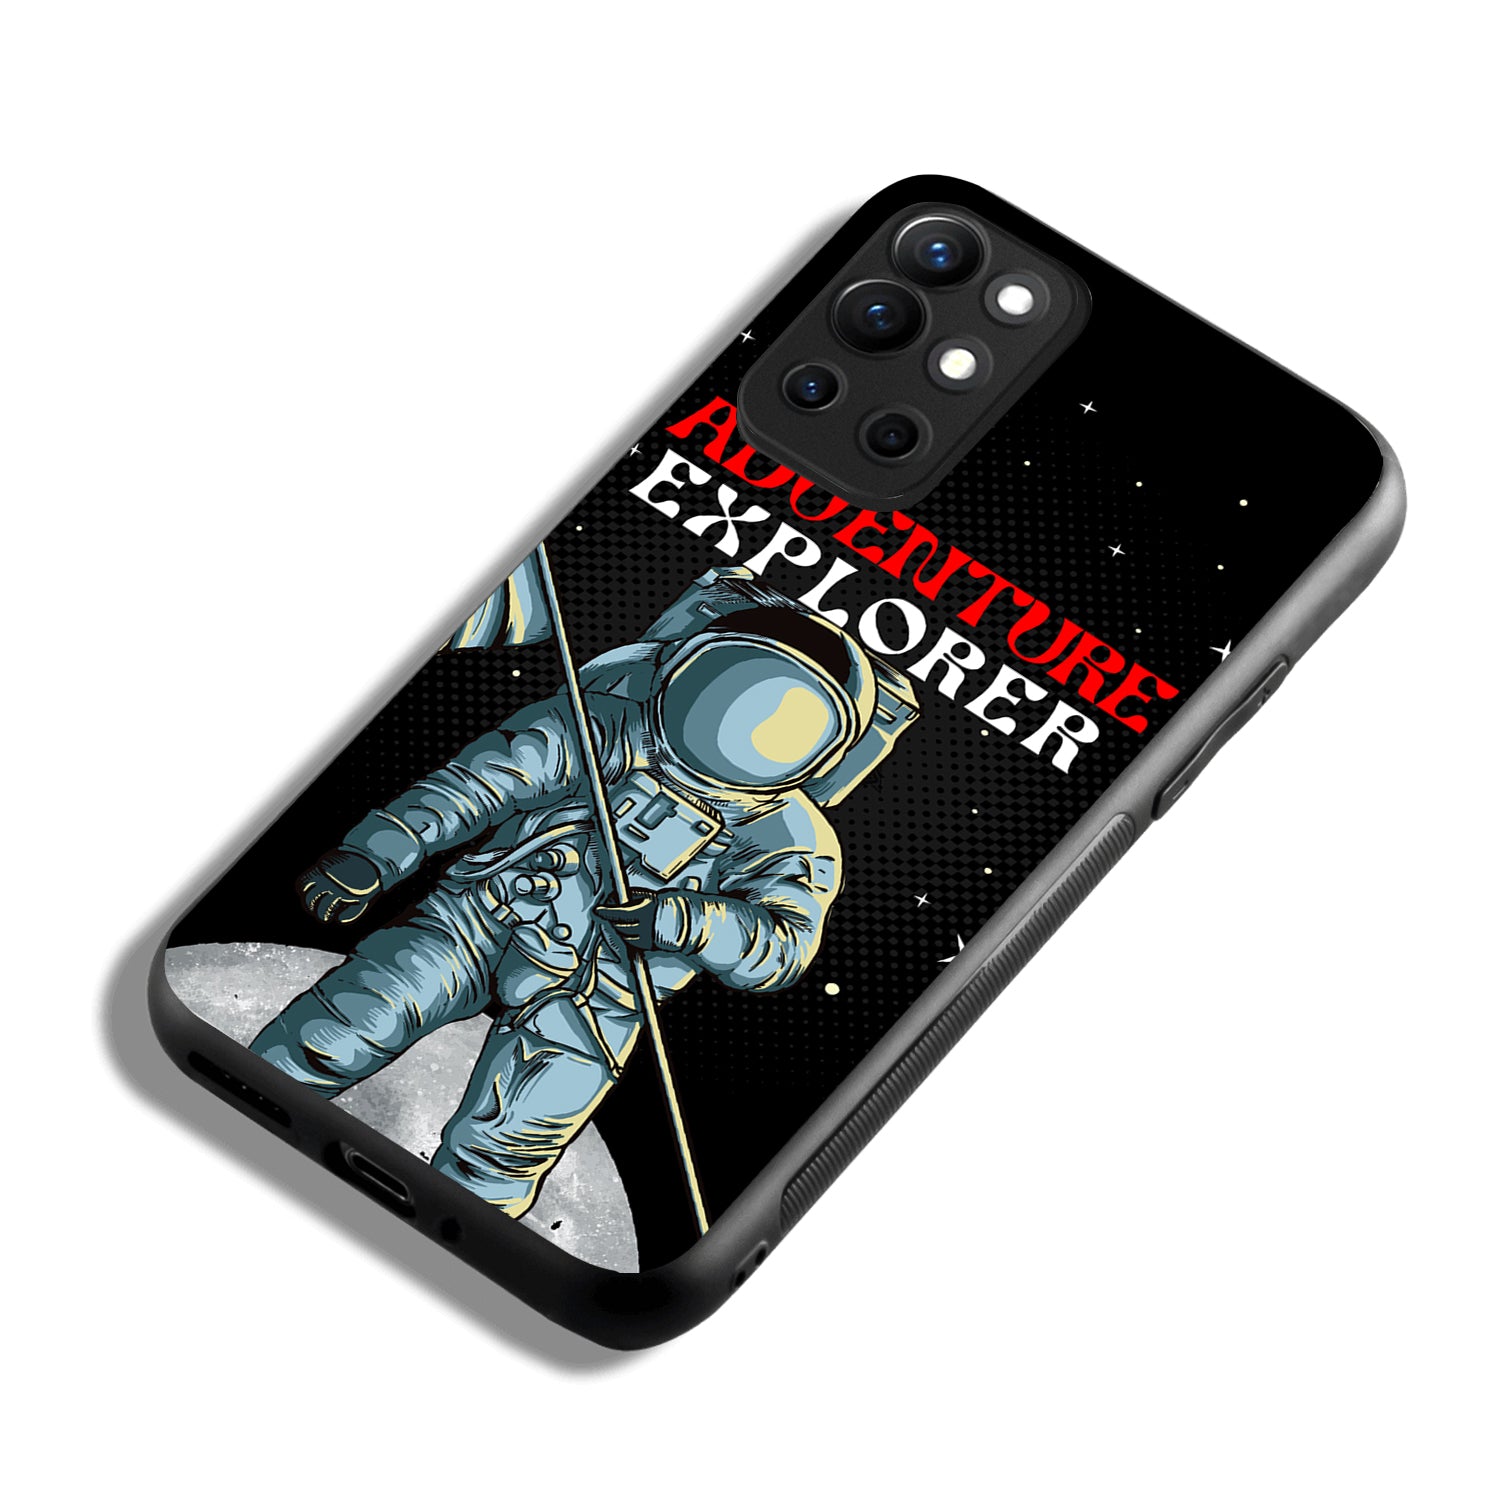 Adventure Explorer Space Oneplus 9 R Back Case